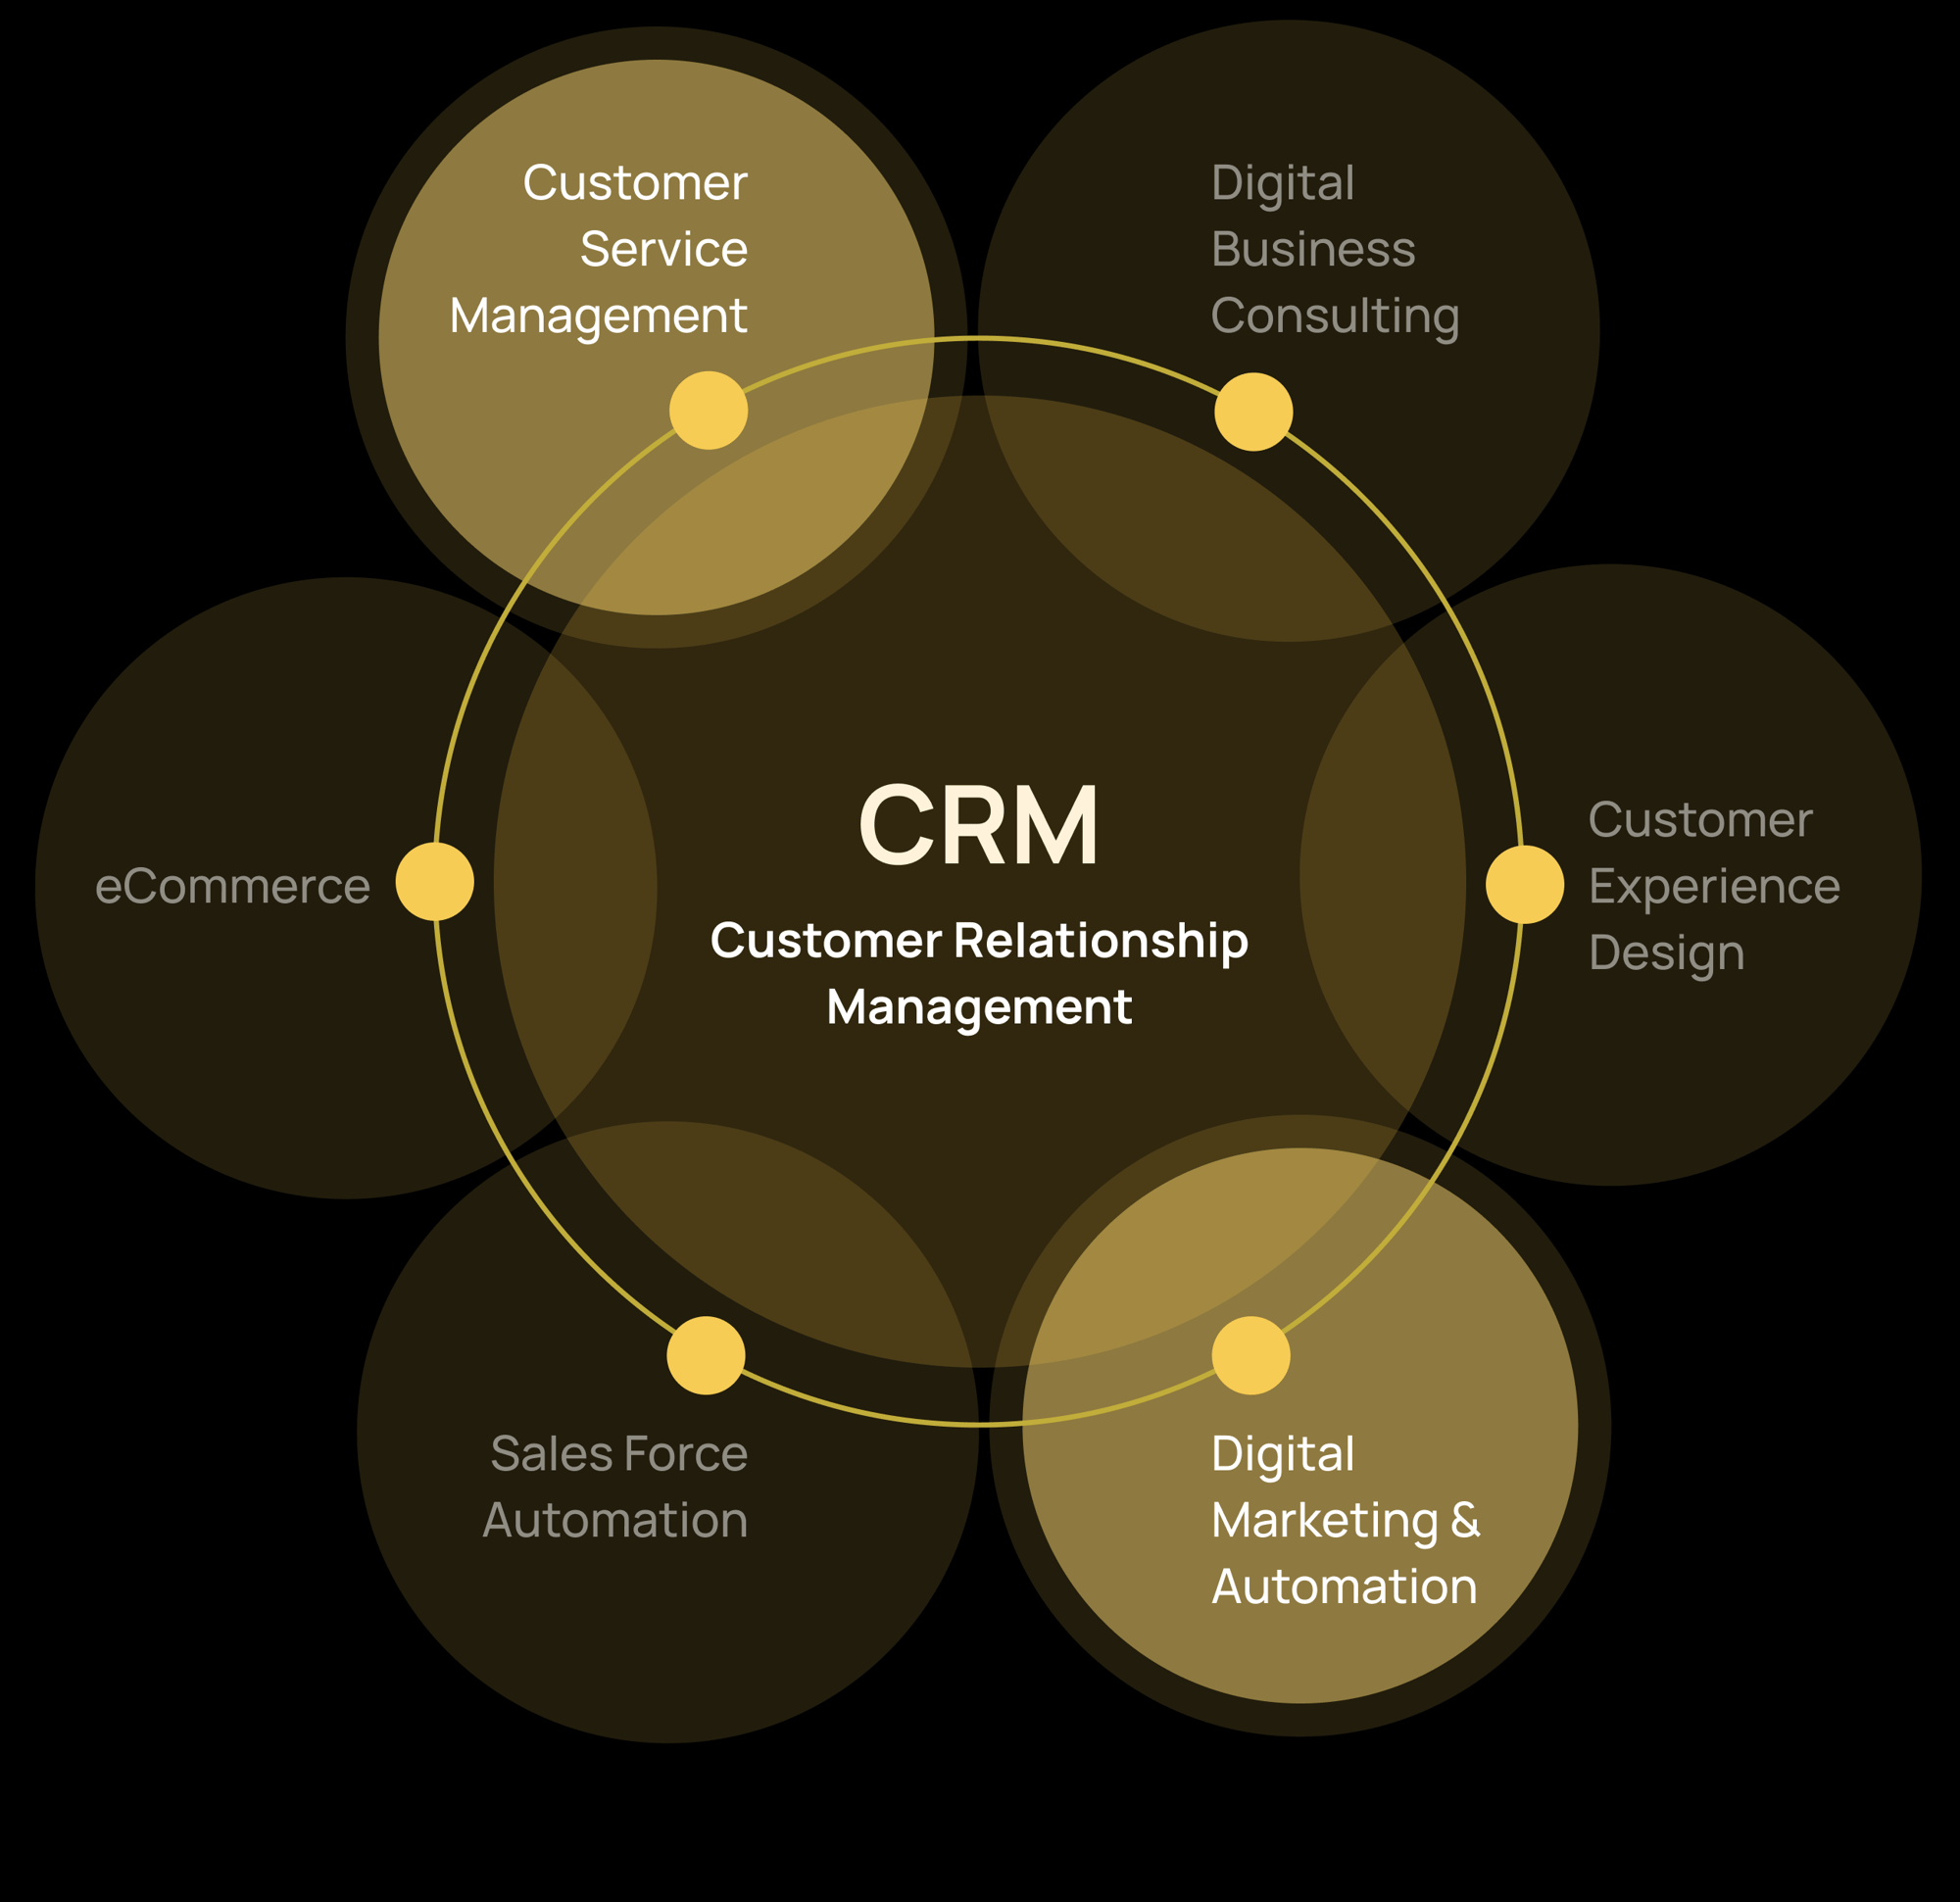 Magic Circle: Customer Service Management & Digital Business Consulting